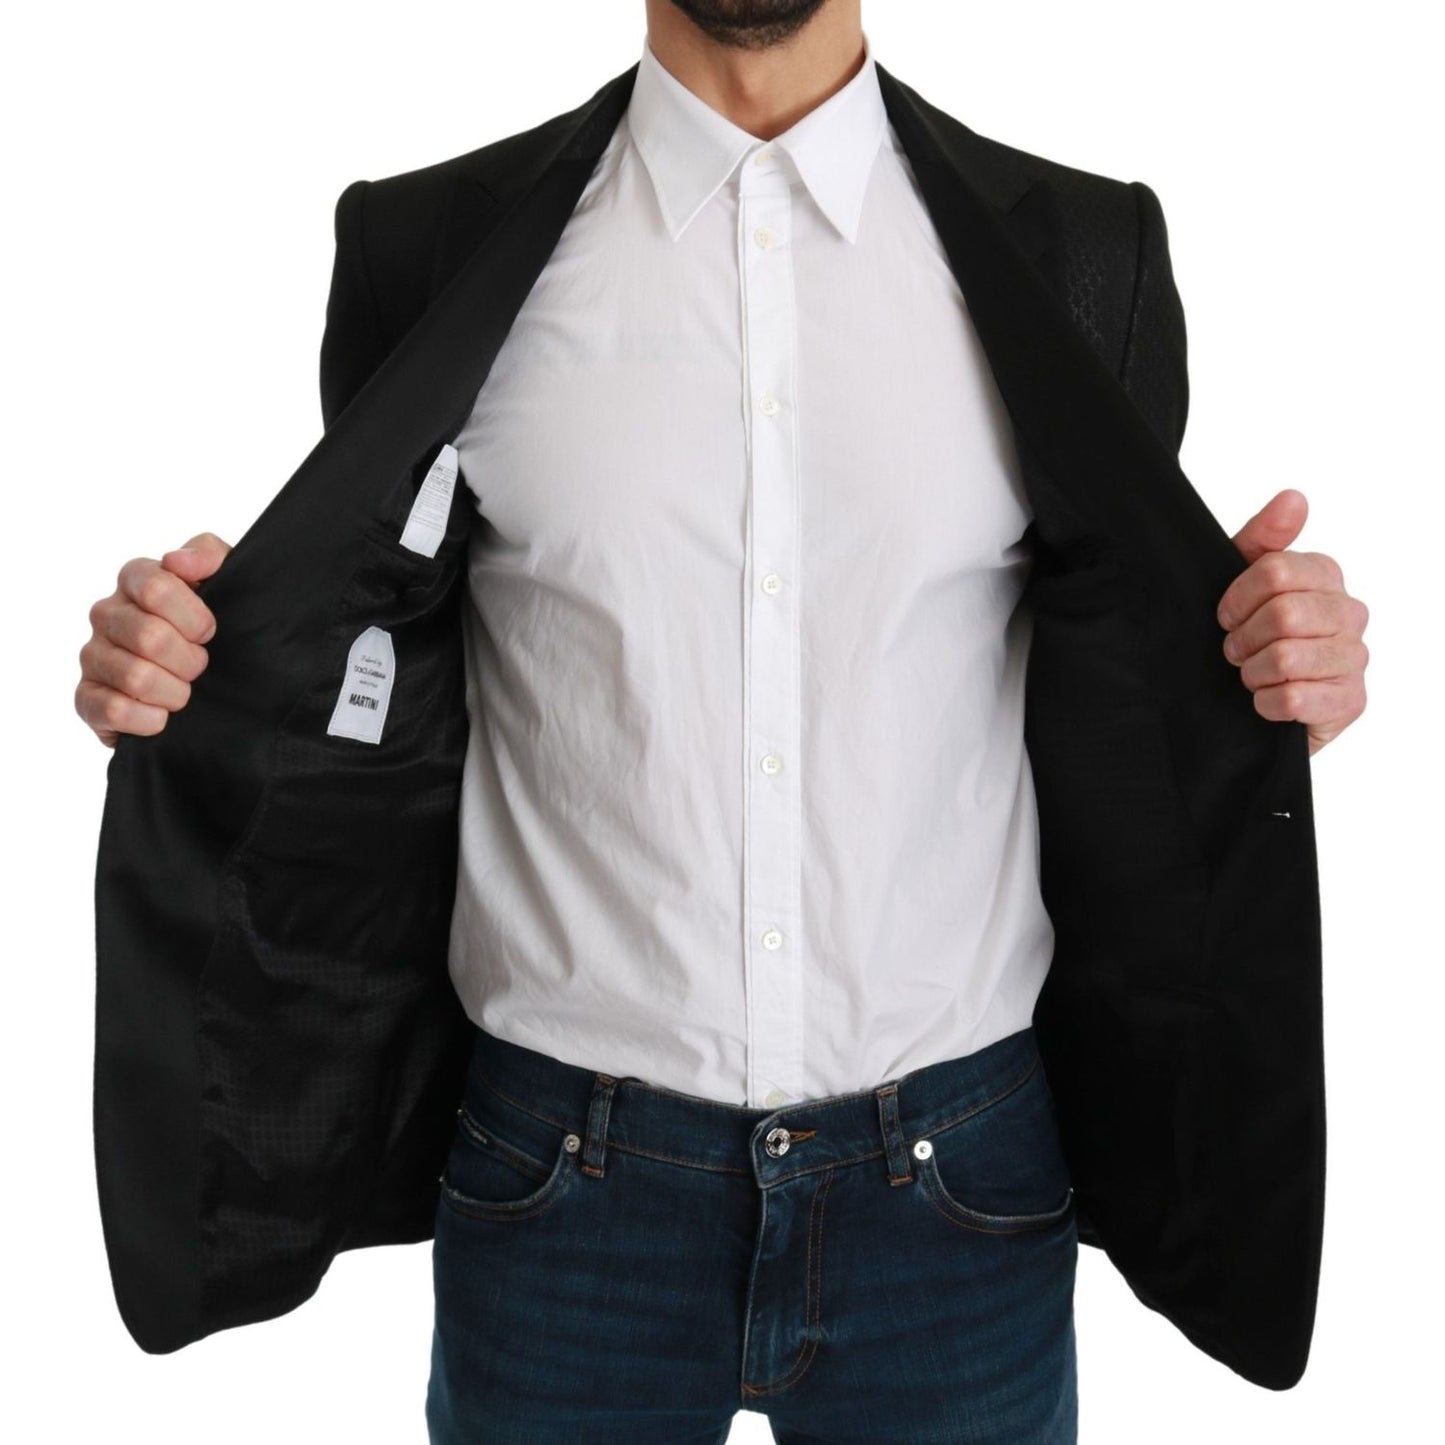 Dolce & Gabbana Slim Fit Martini Black Blazer Jacket Suit black-slim-fit-jacket-martini-blazer IMG_1018-a698a9a8-26c.jpg